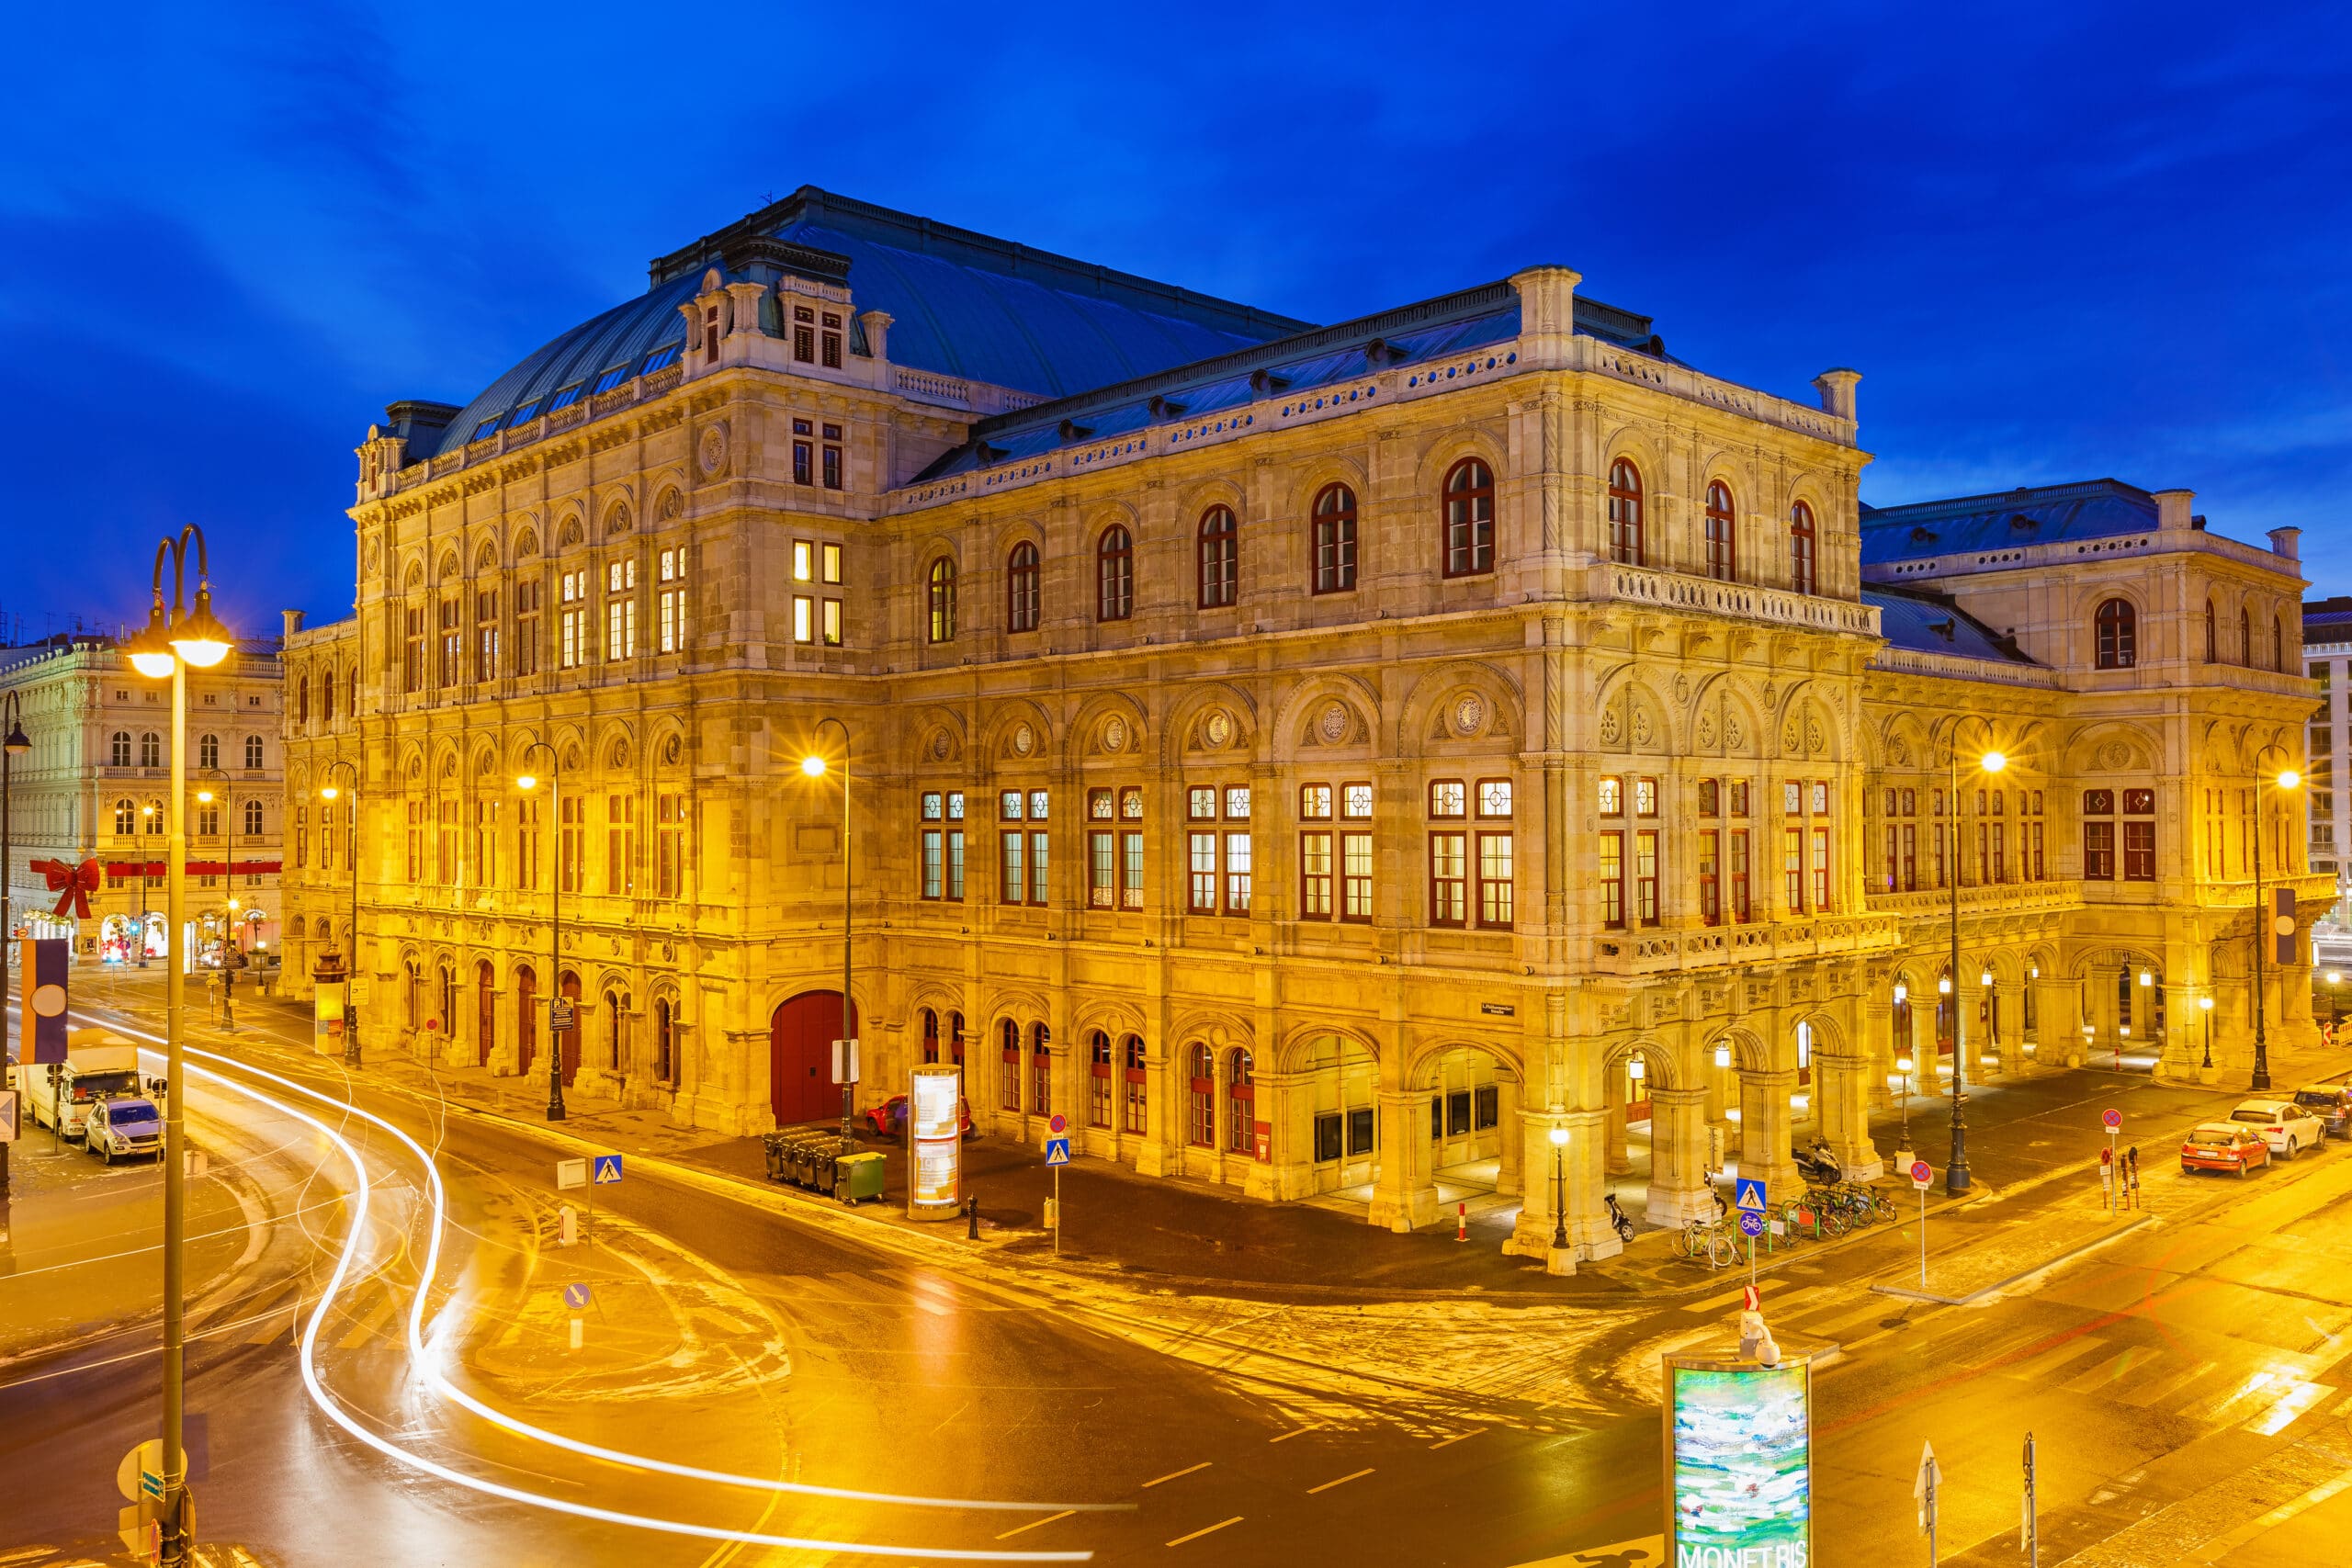 State Opera House in Vienna, Austria